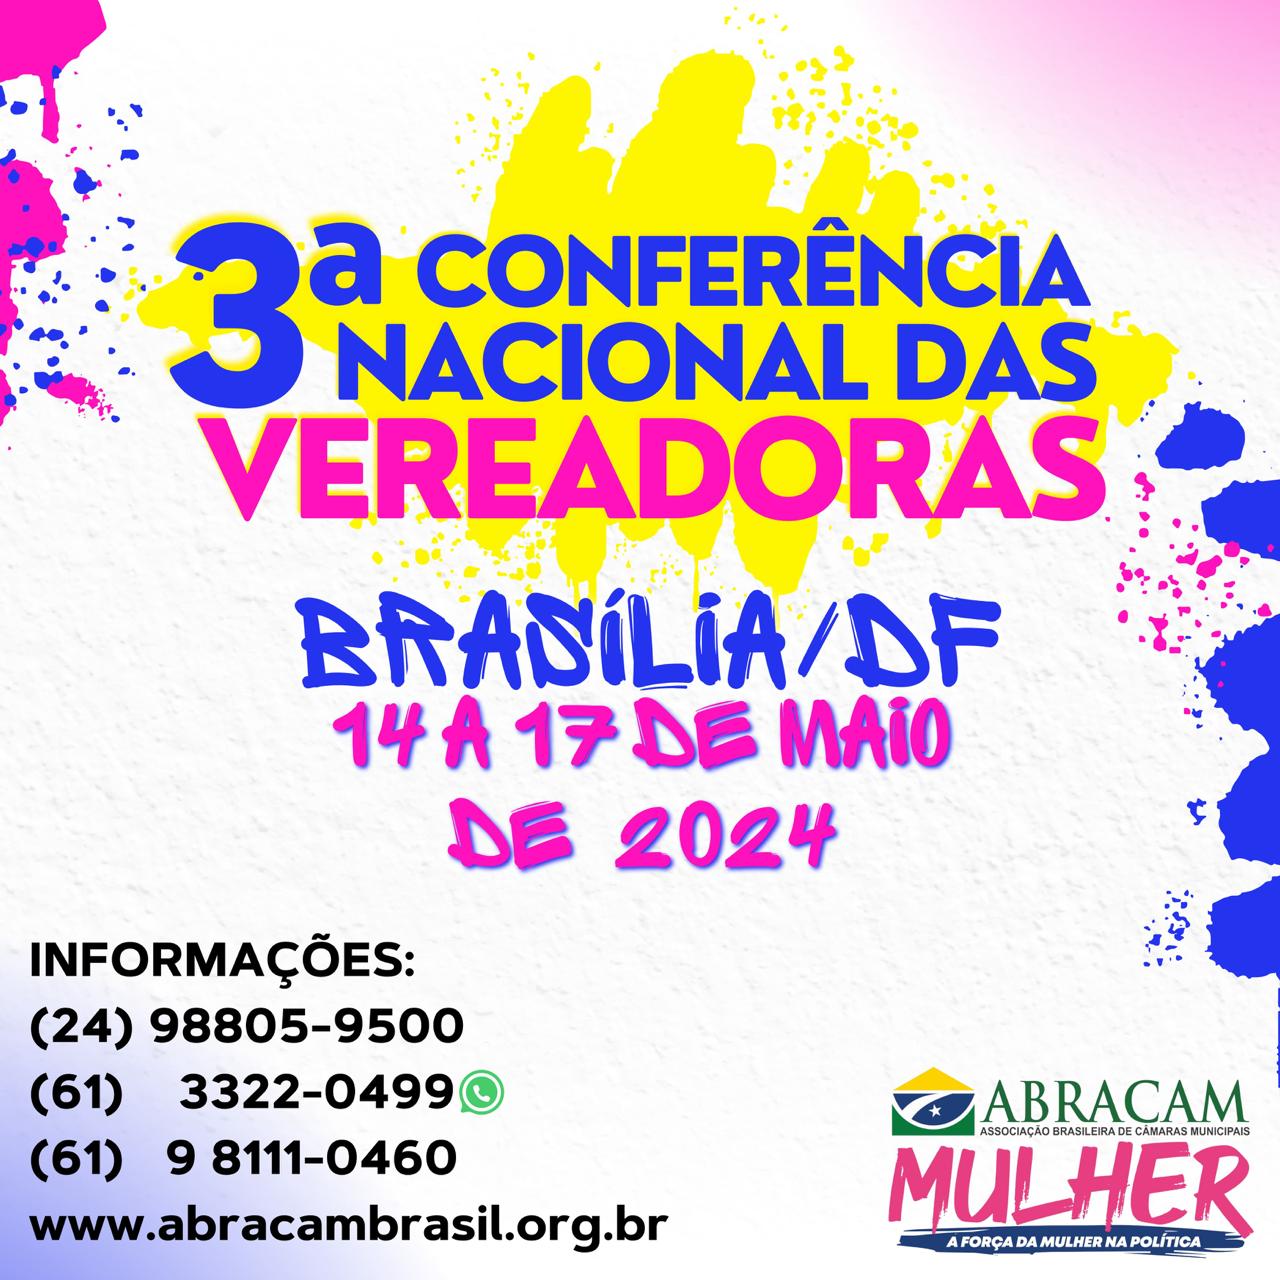 3 ª Conferência Nacional de Vereadoras em Brasília